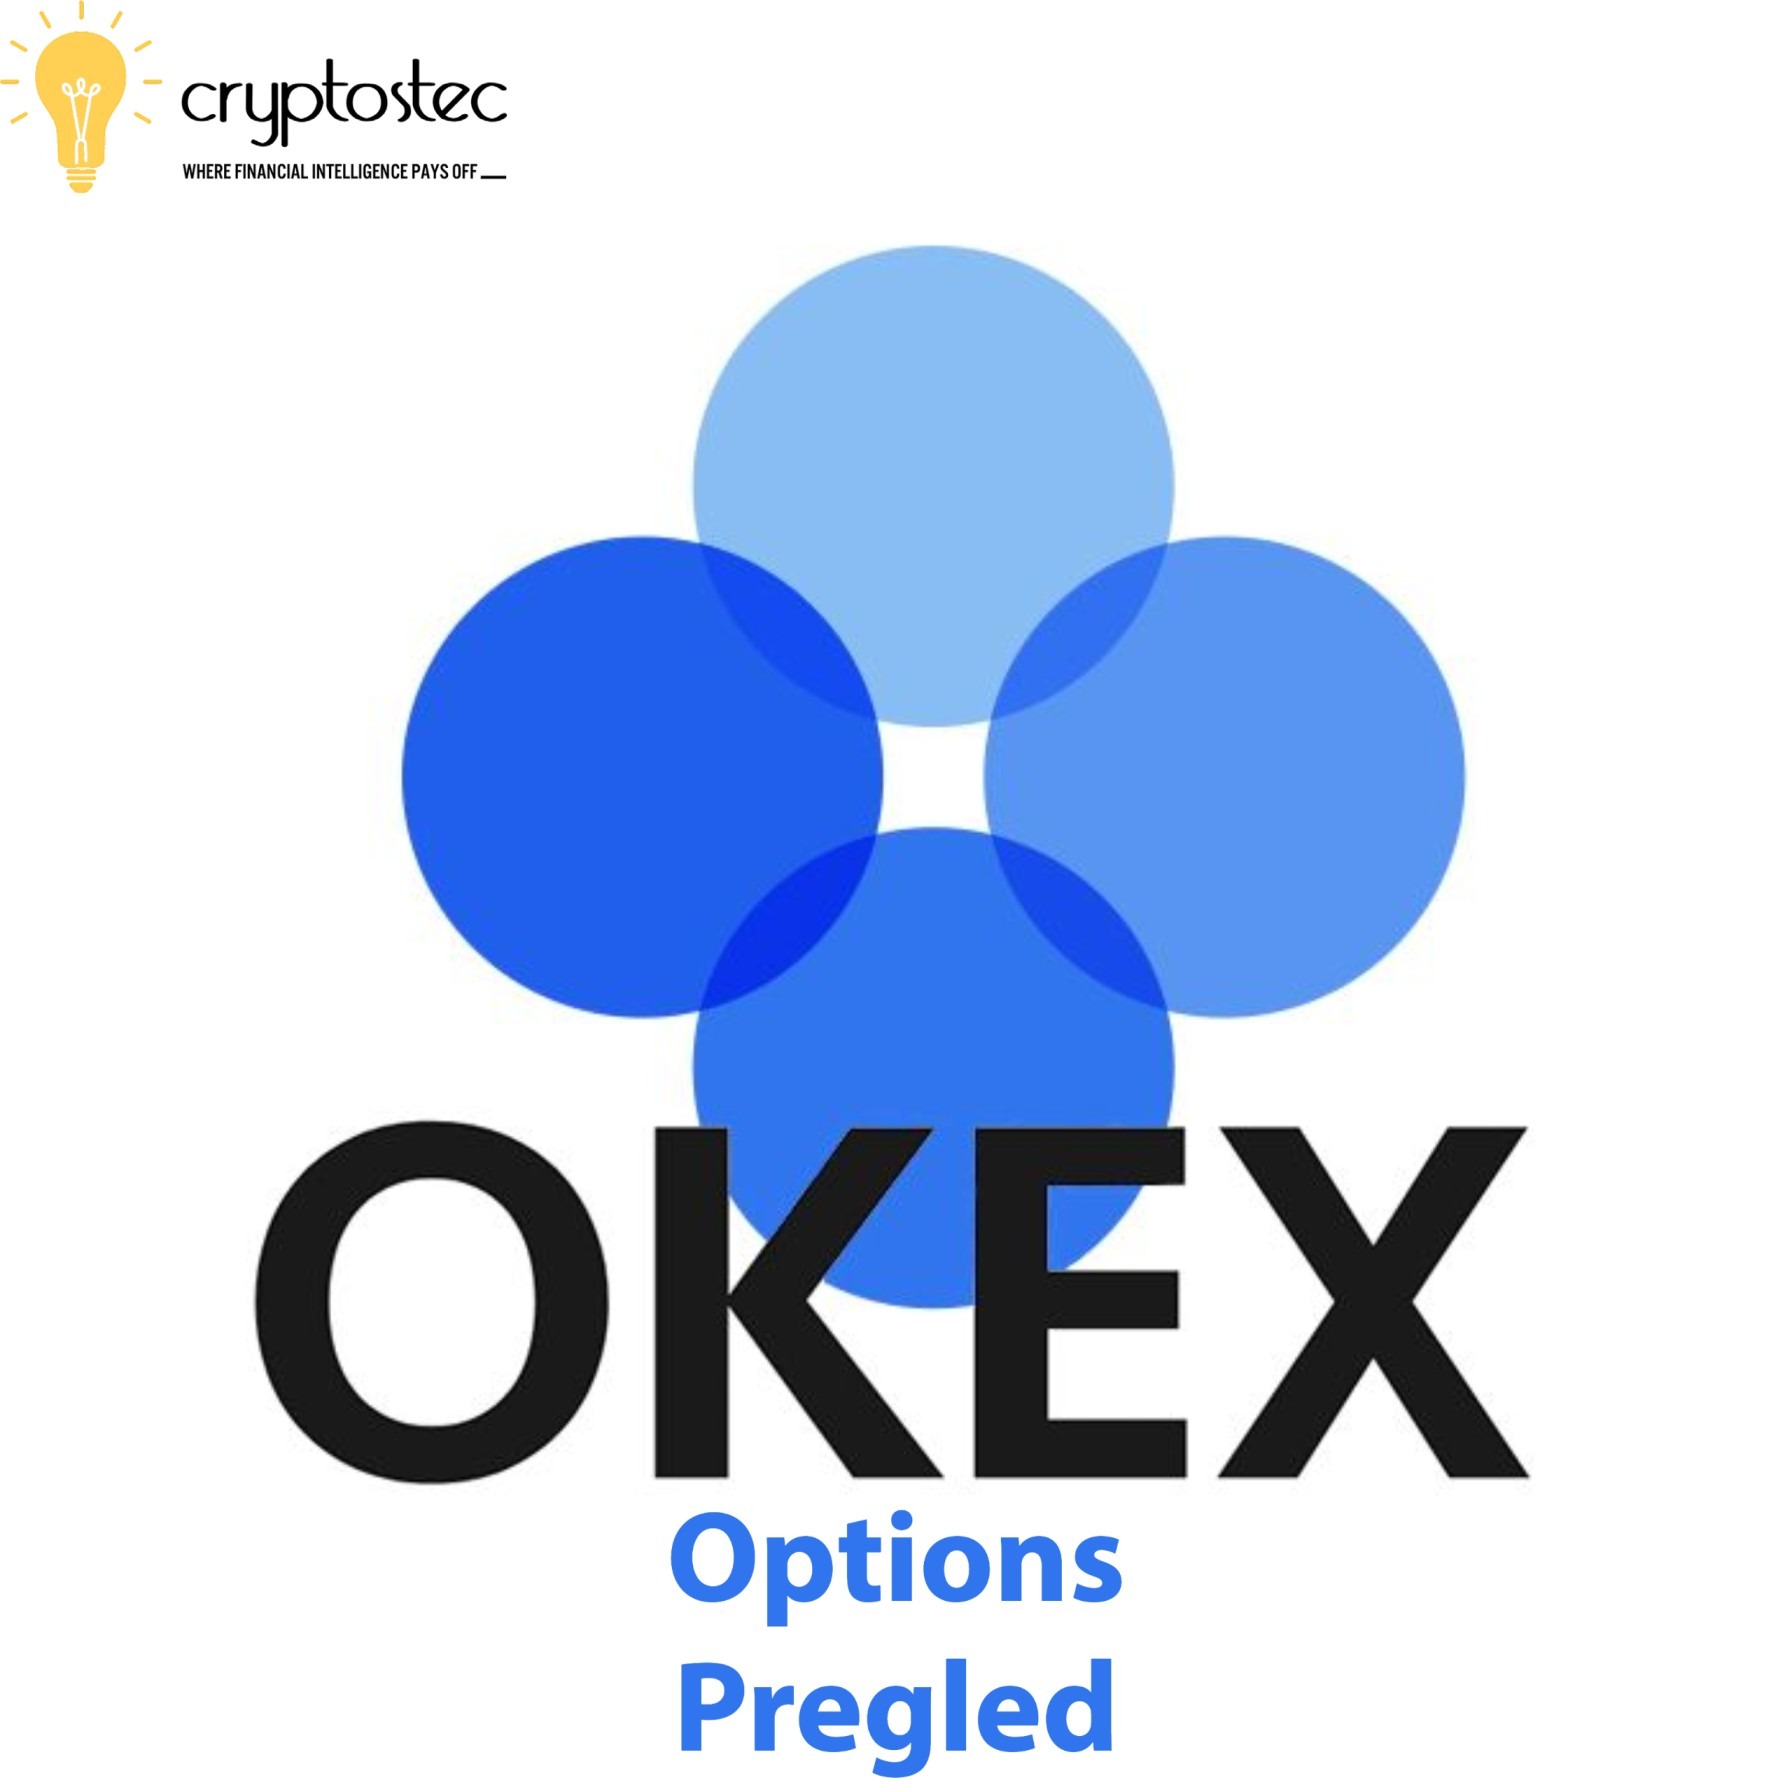 OKEX pregled - Bitcoin Options edicija - Cryptostec